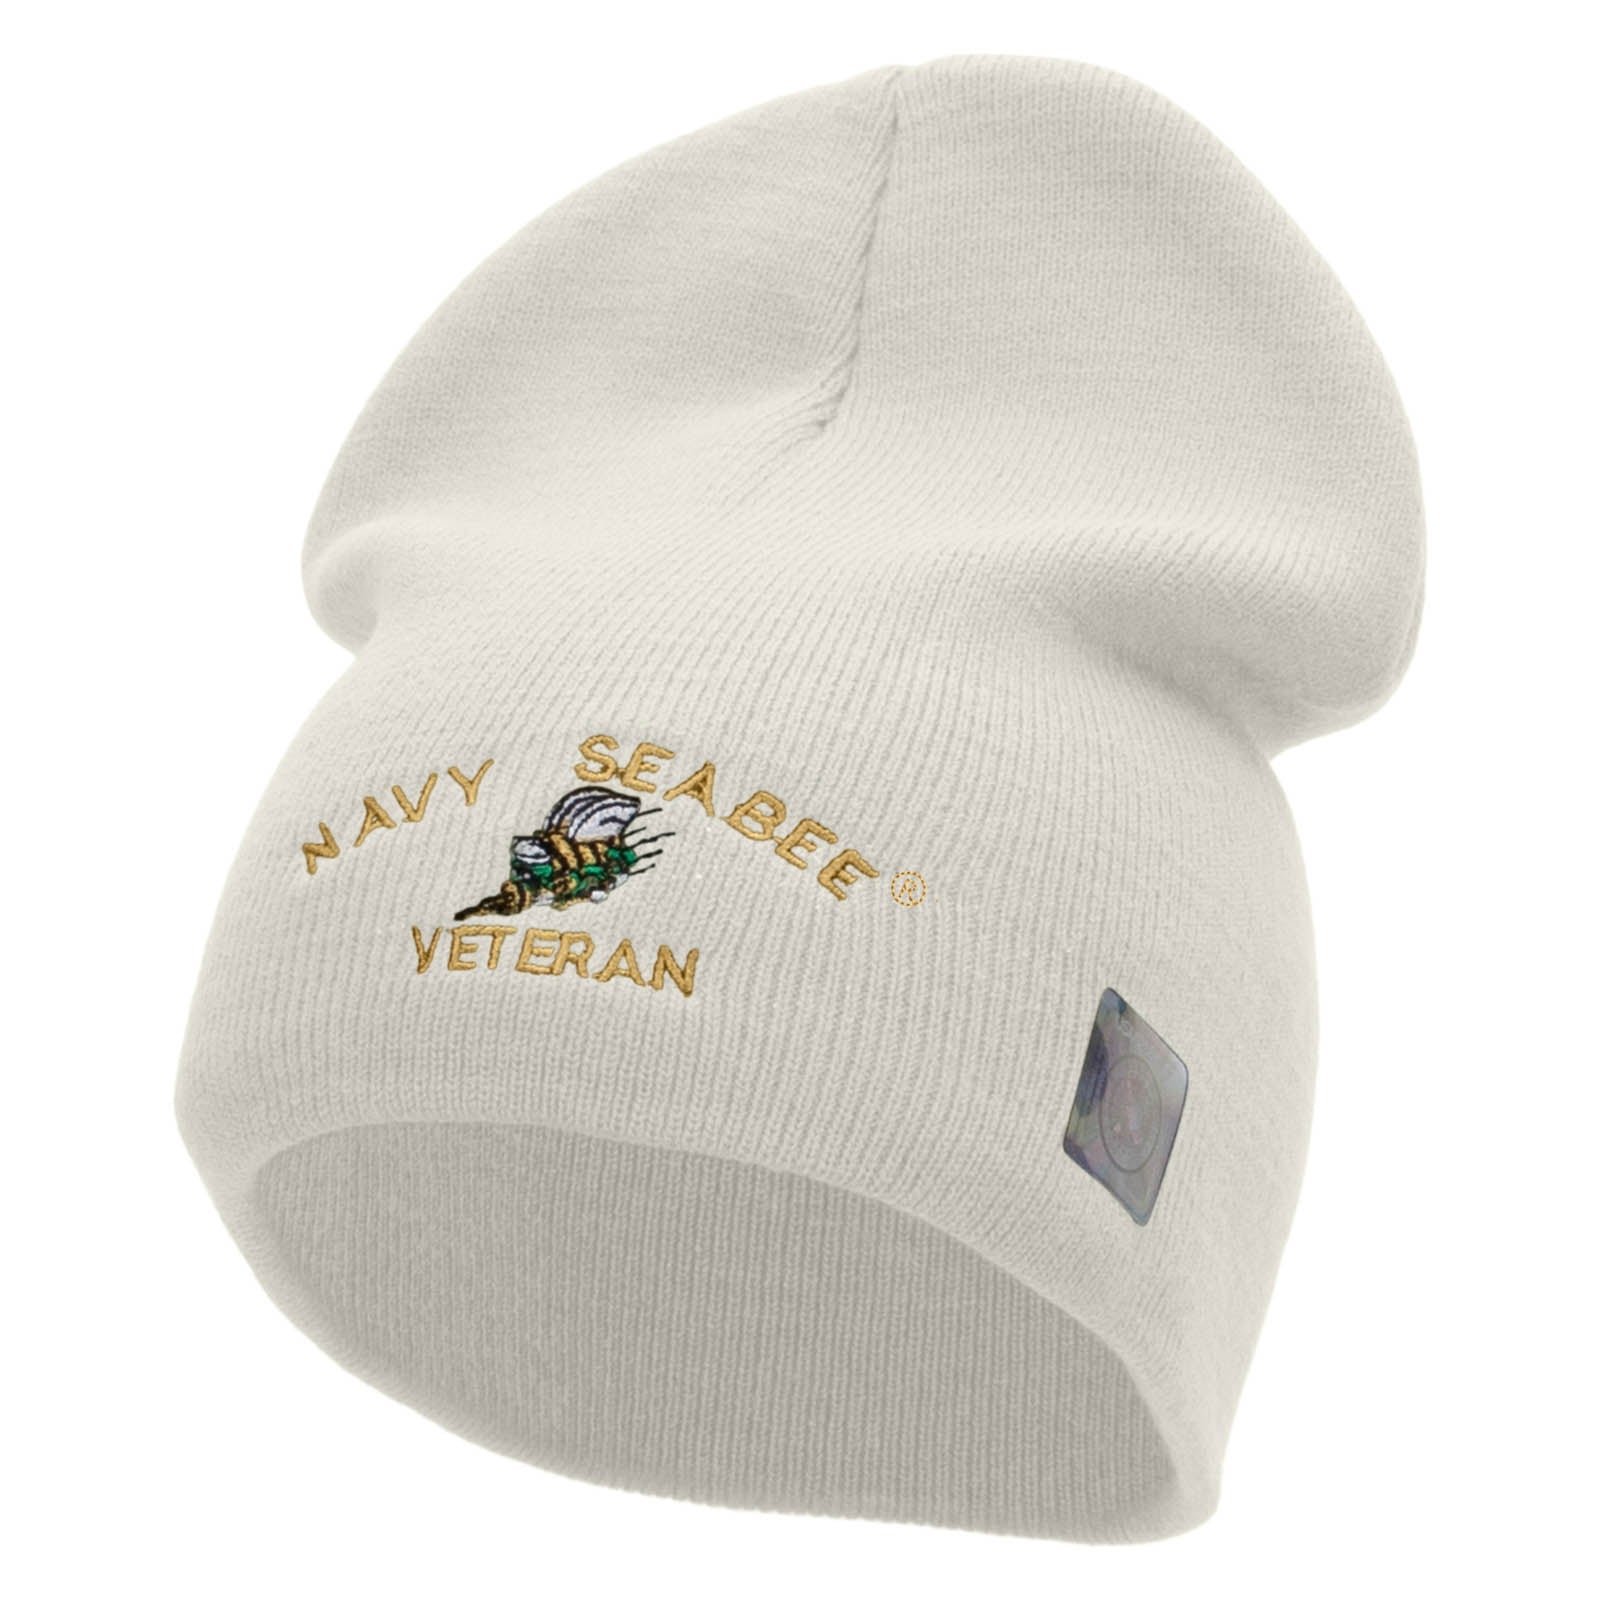 Licensed Navy Seabee Veteran Embroidered Short Beanie Made in USA - White OSFM